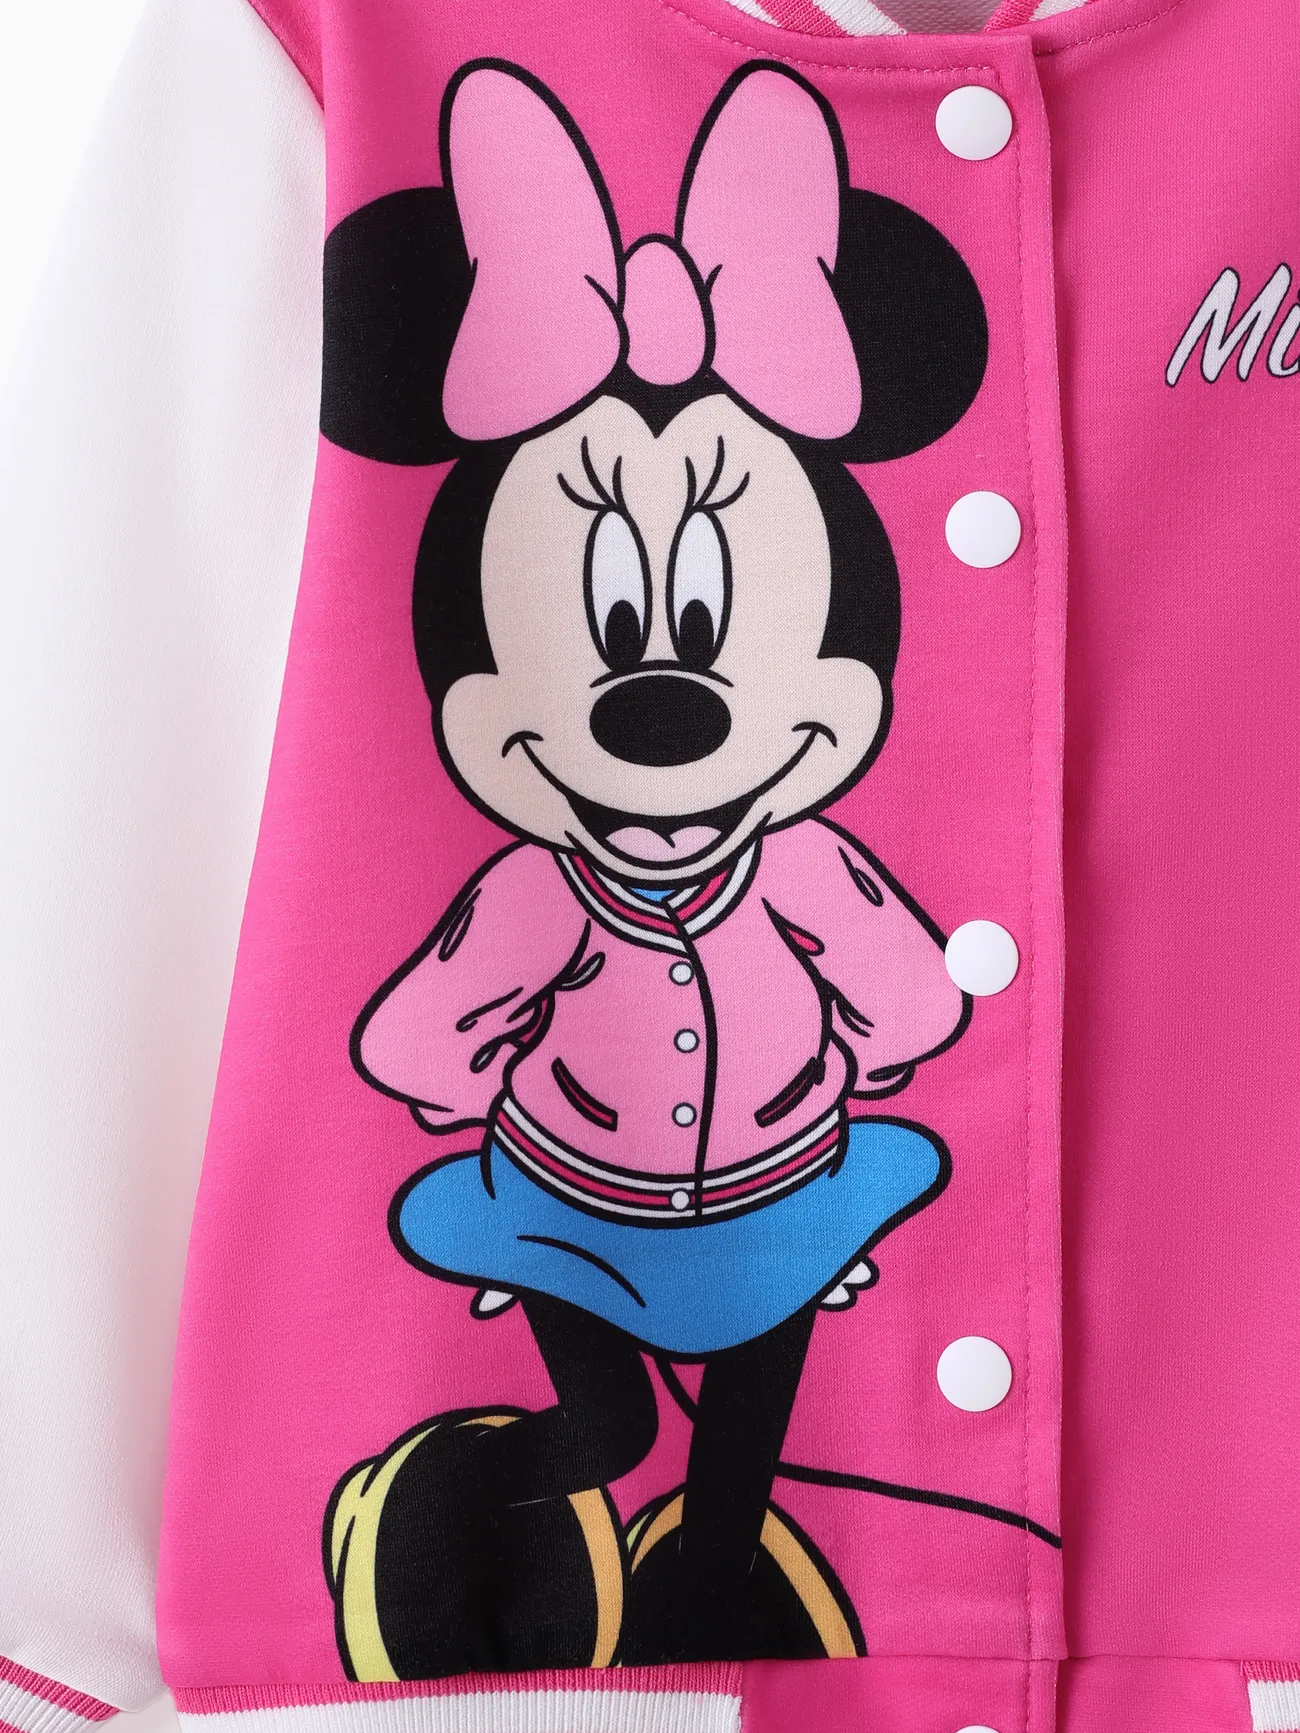 Disney Mickey and Friends Fille Bouton Doux Manteau / Veste Rose Vif big image 1